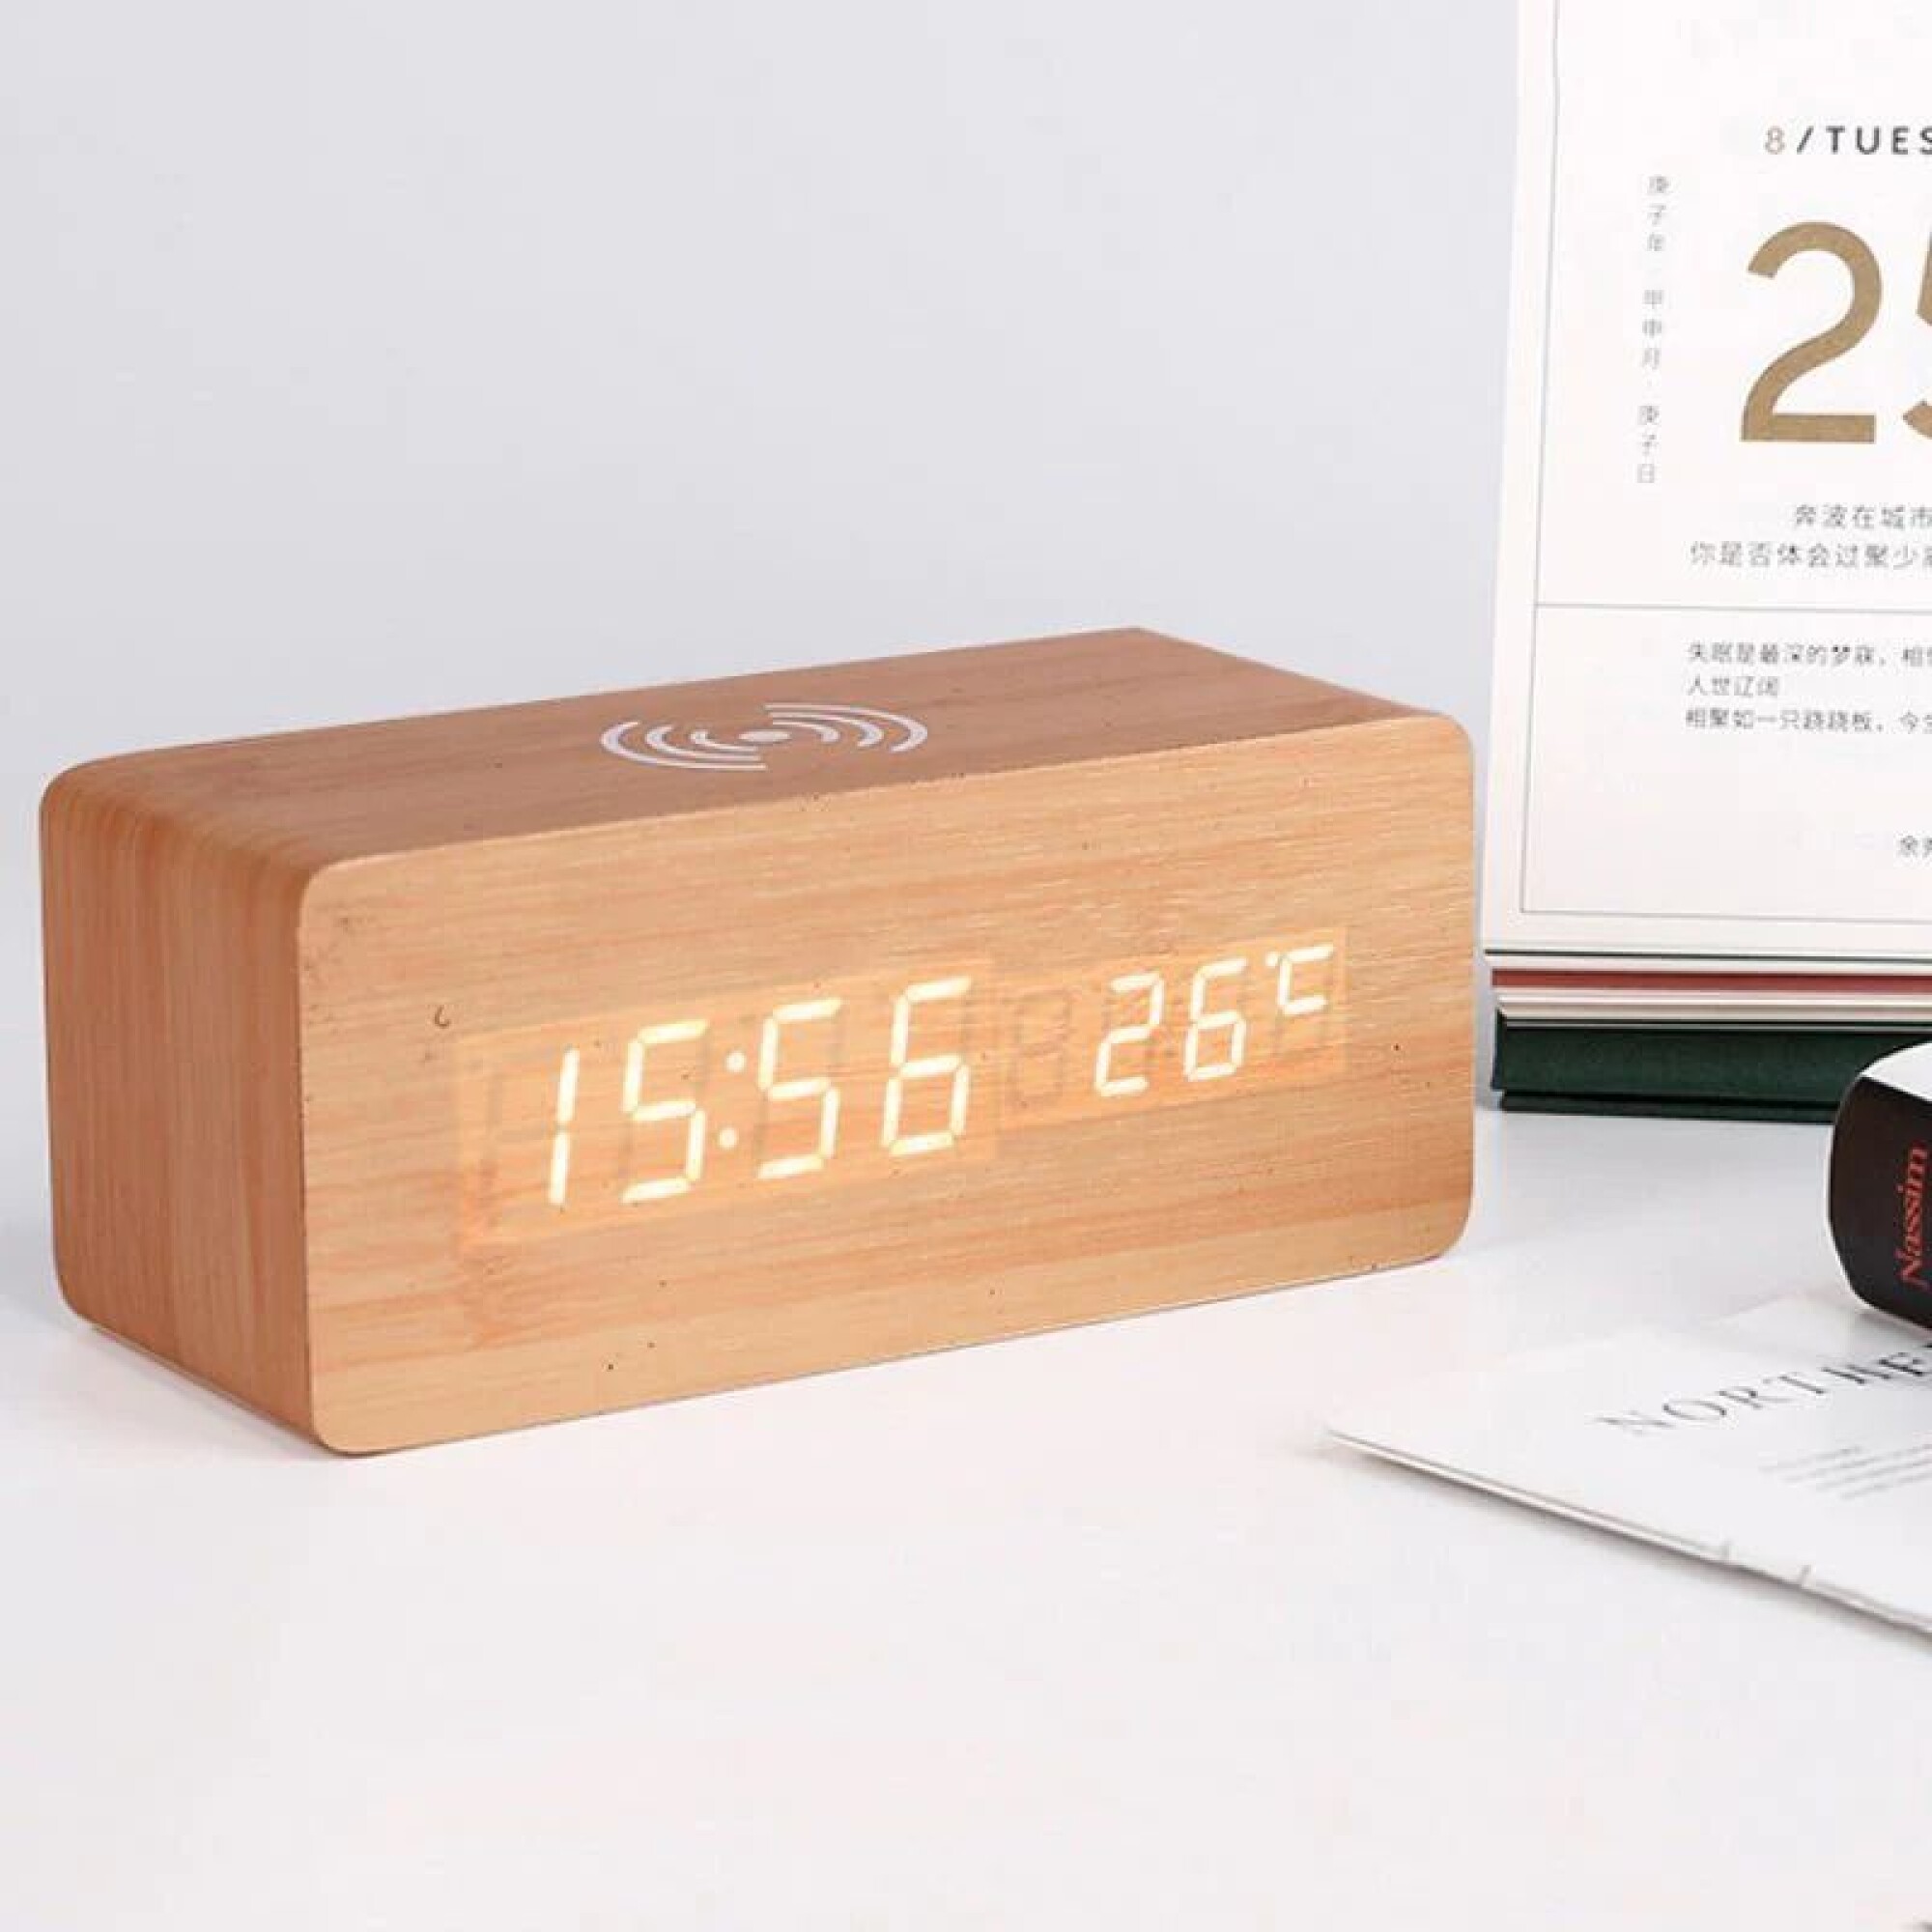 Reloj despertador Digital de madera con carga inalámbrica